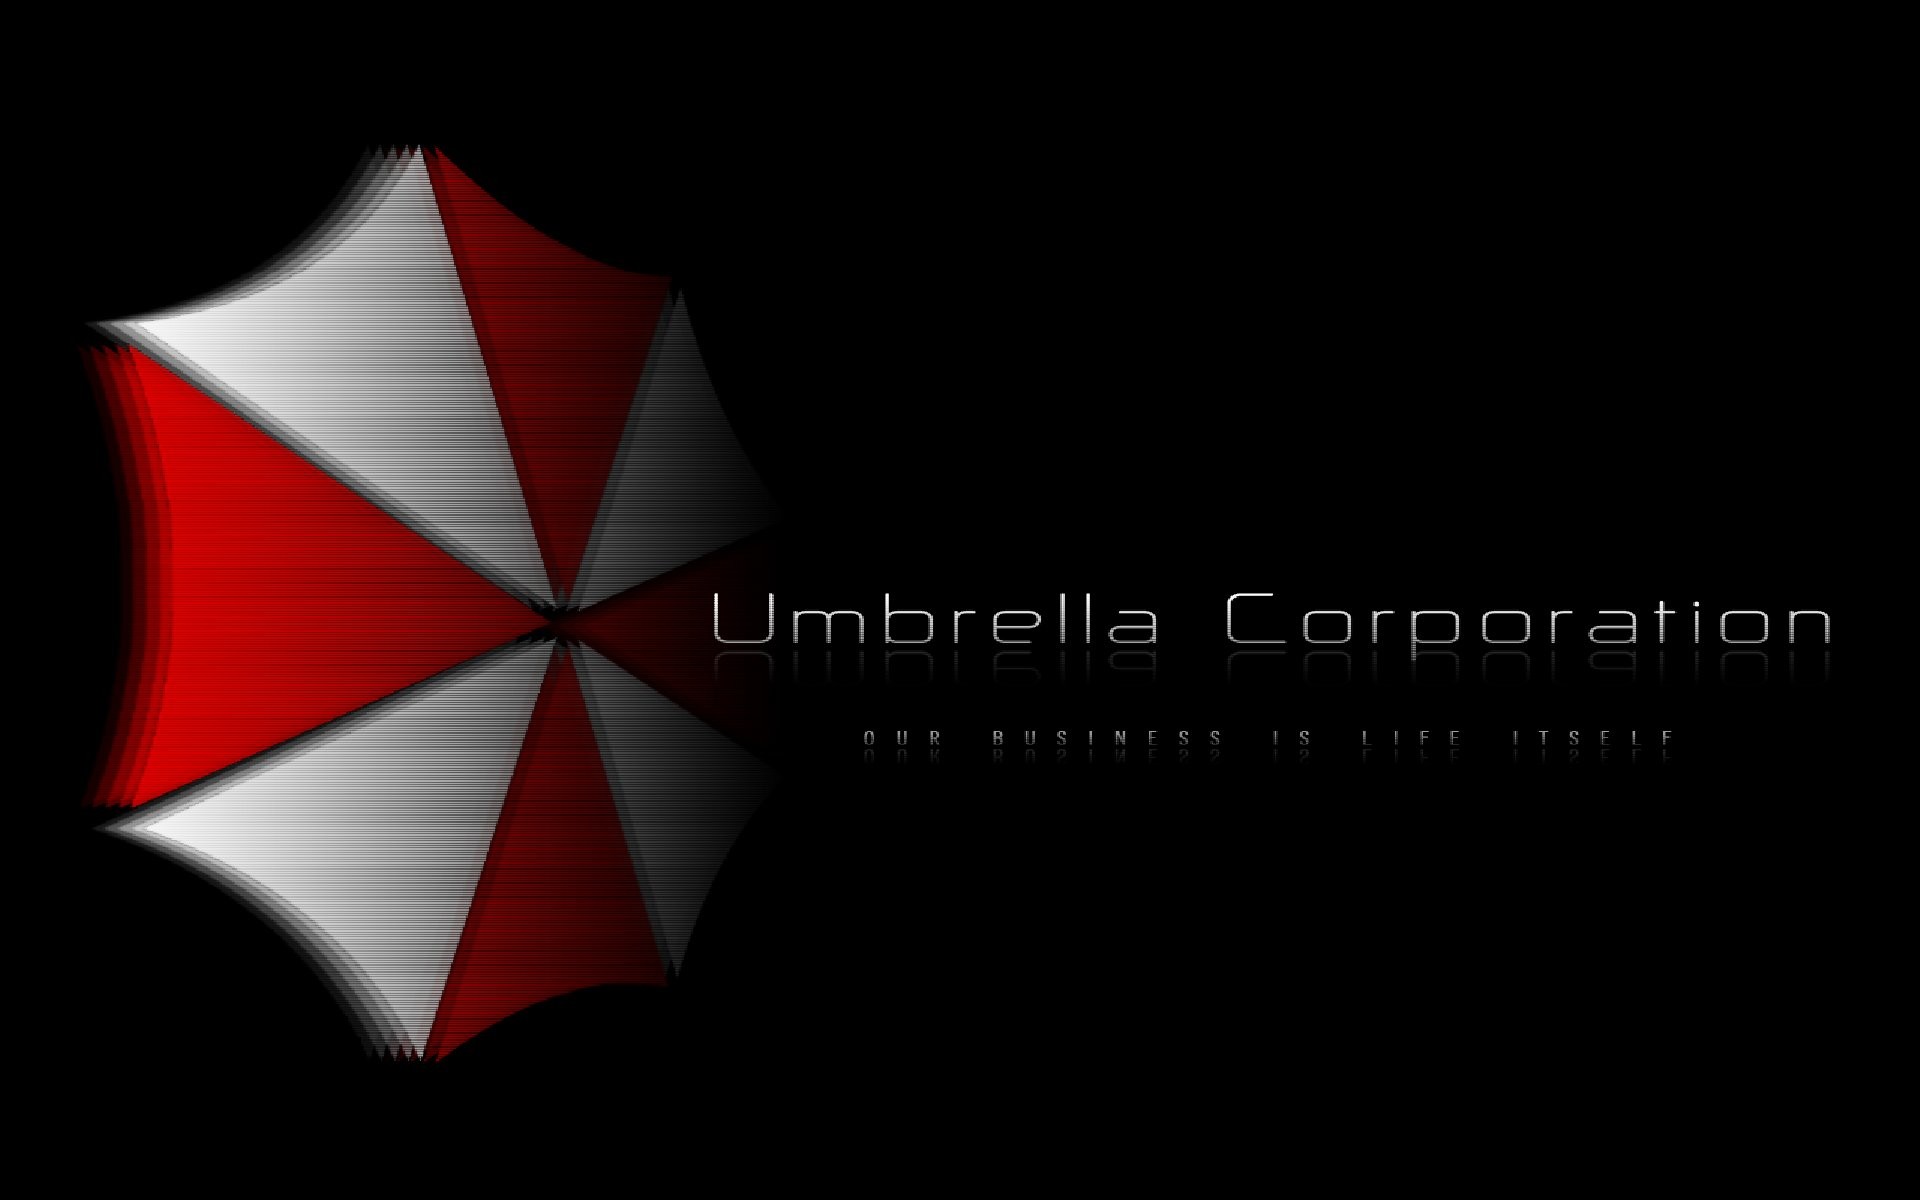 Umbrella Corporation Background